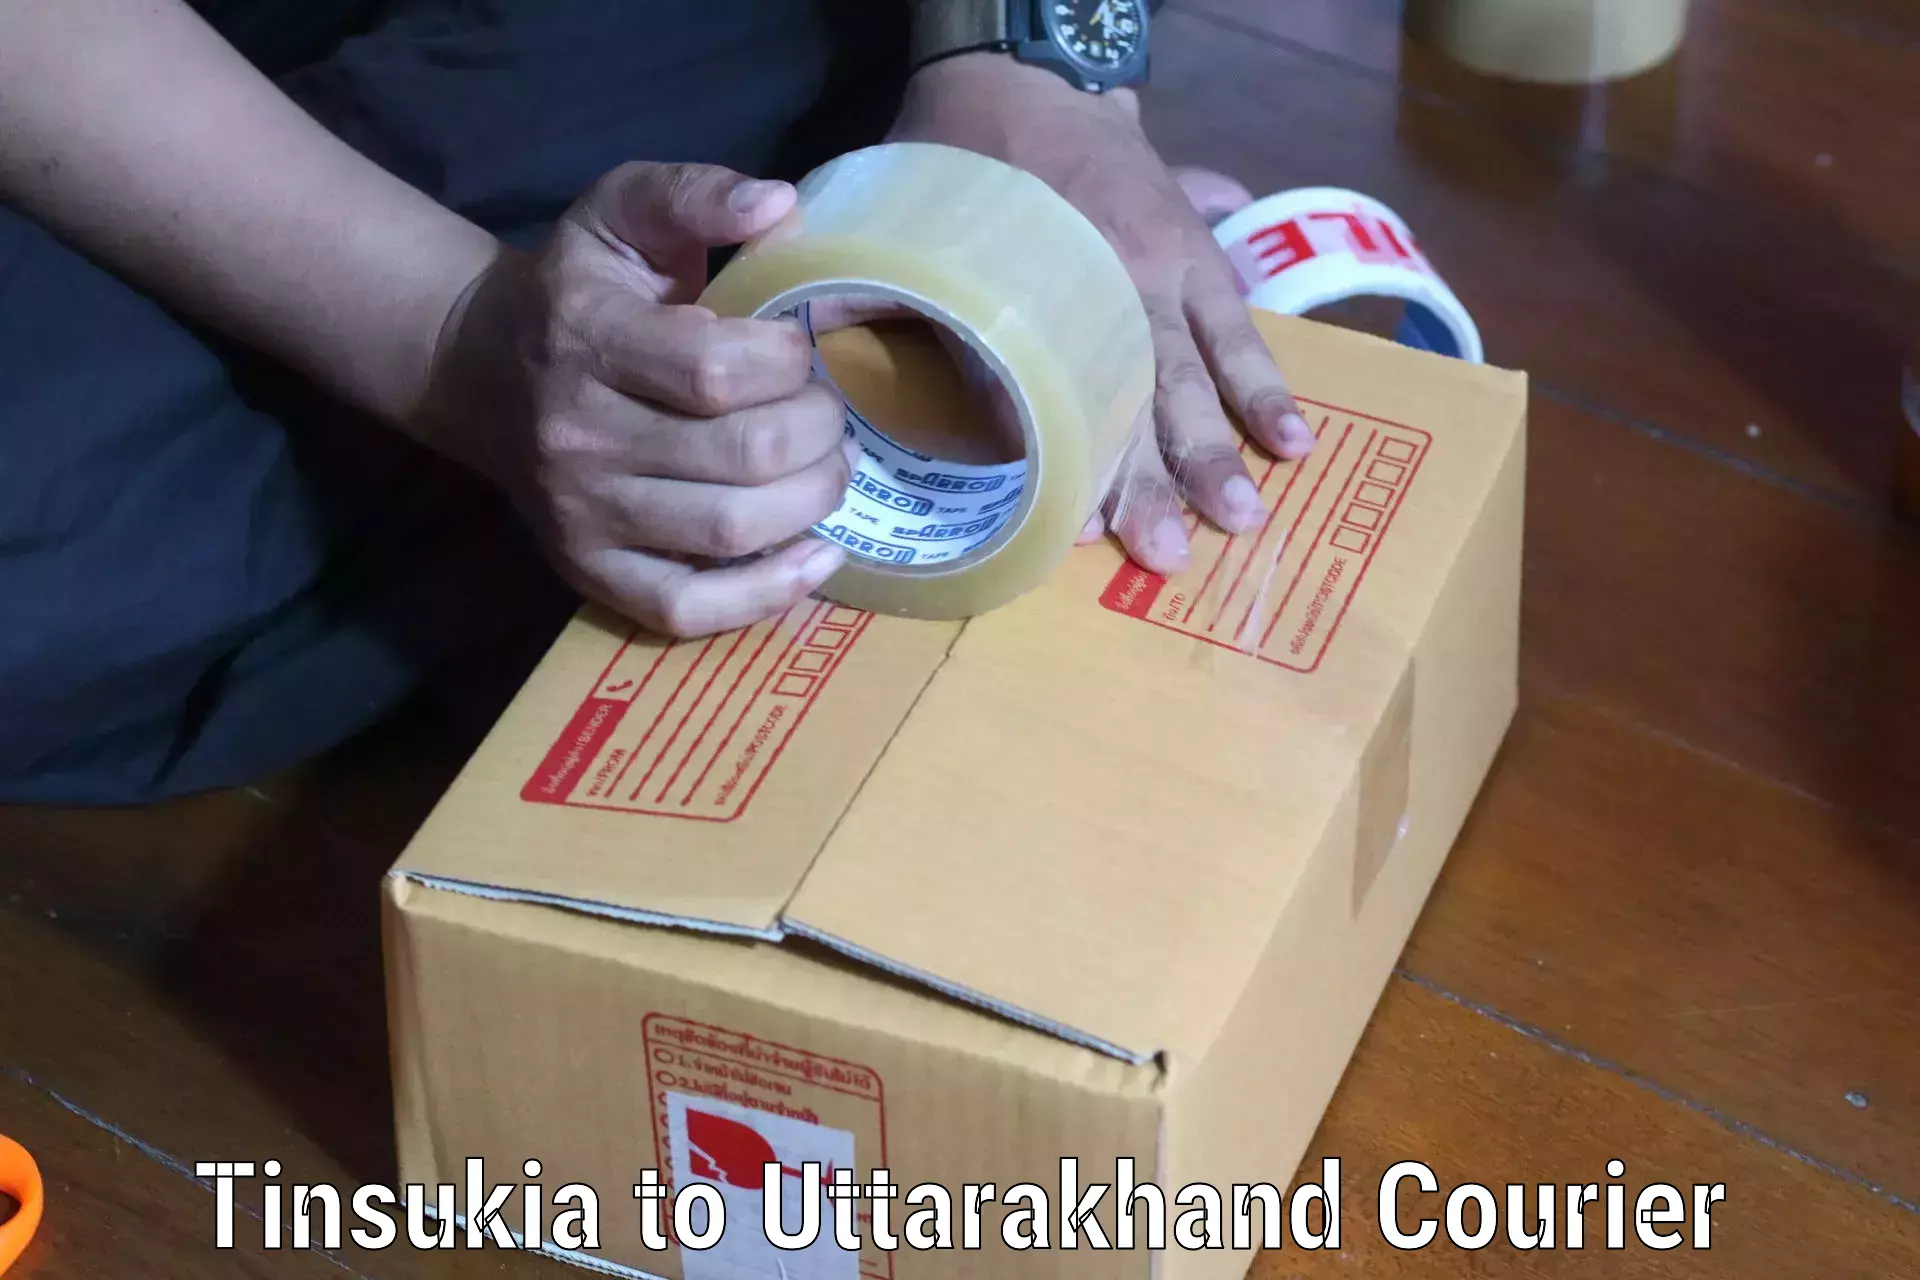 Global courier networks Tinsukia to Kashipur